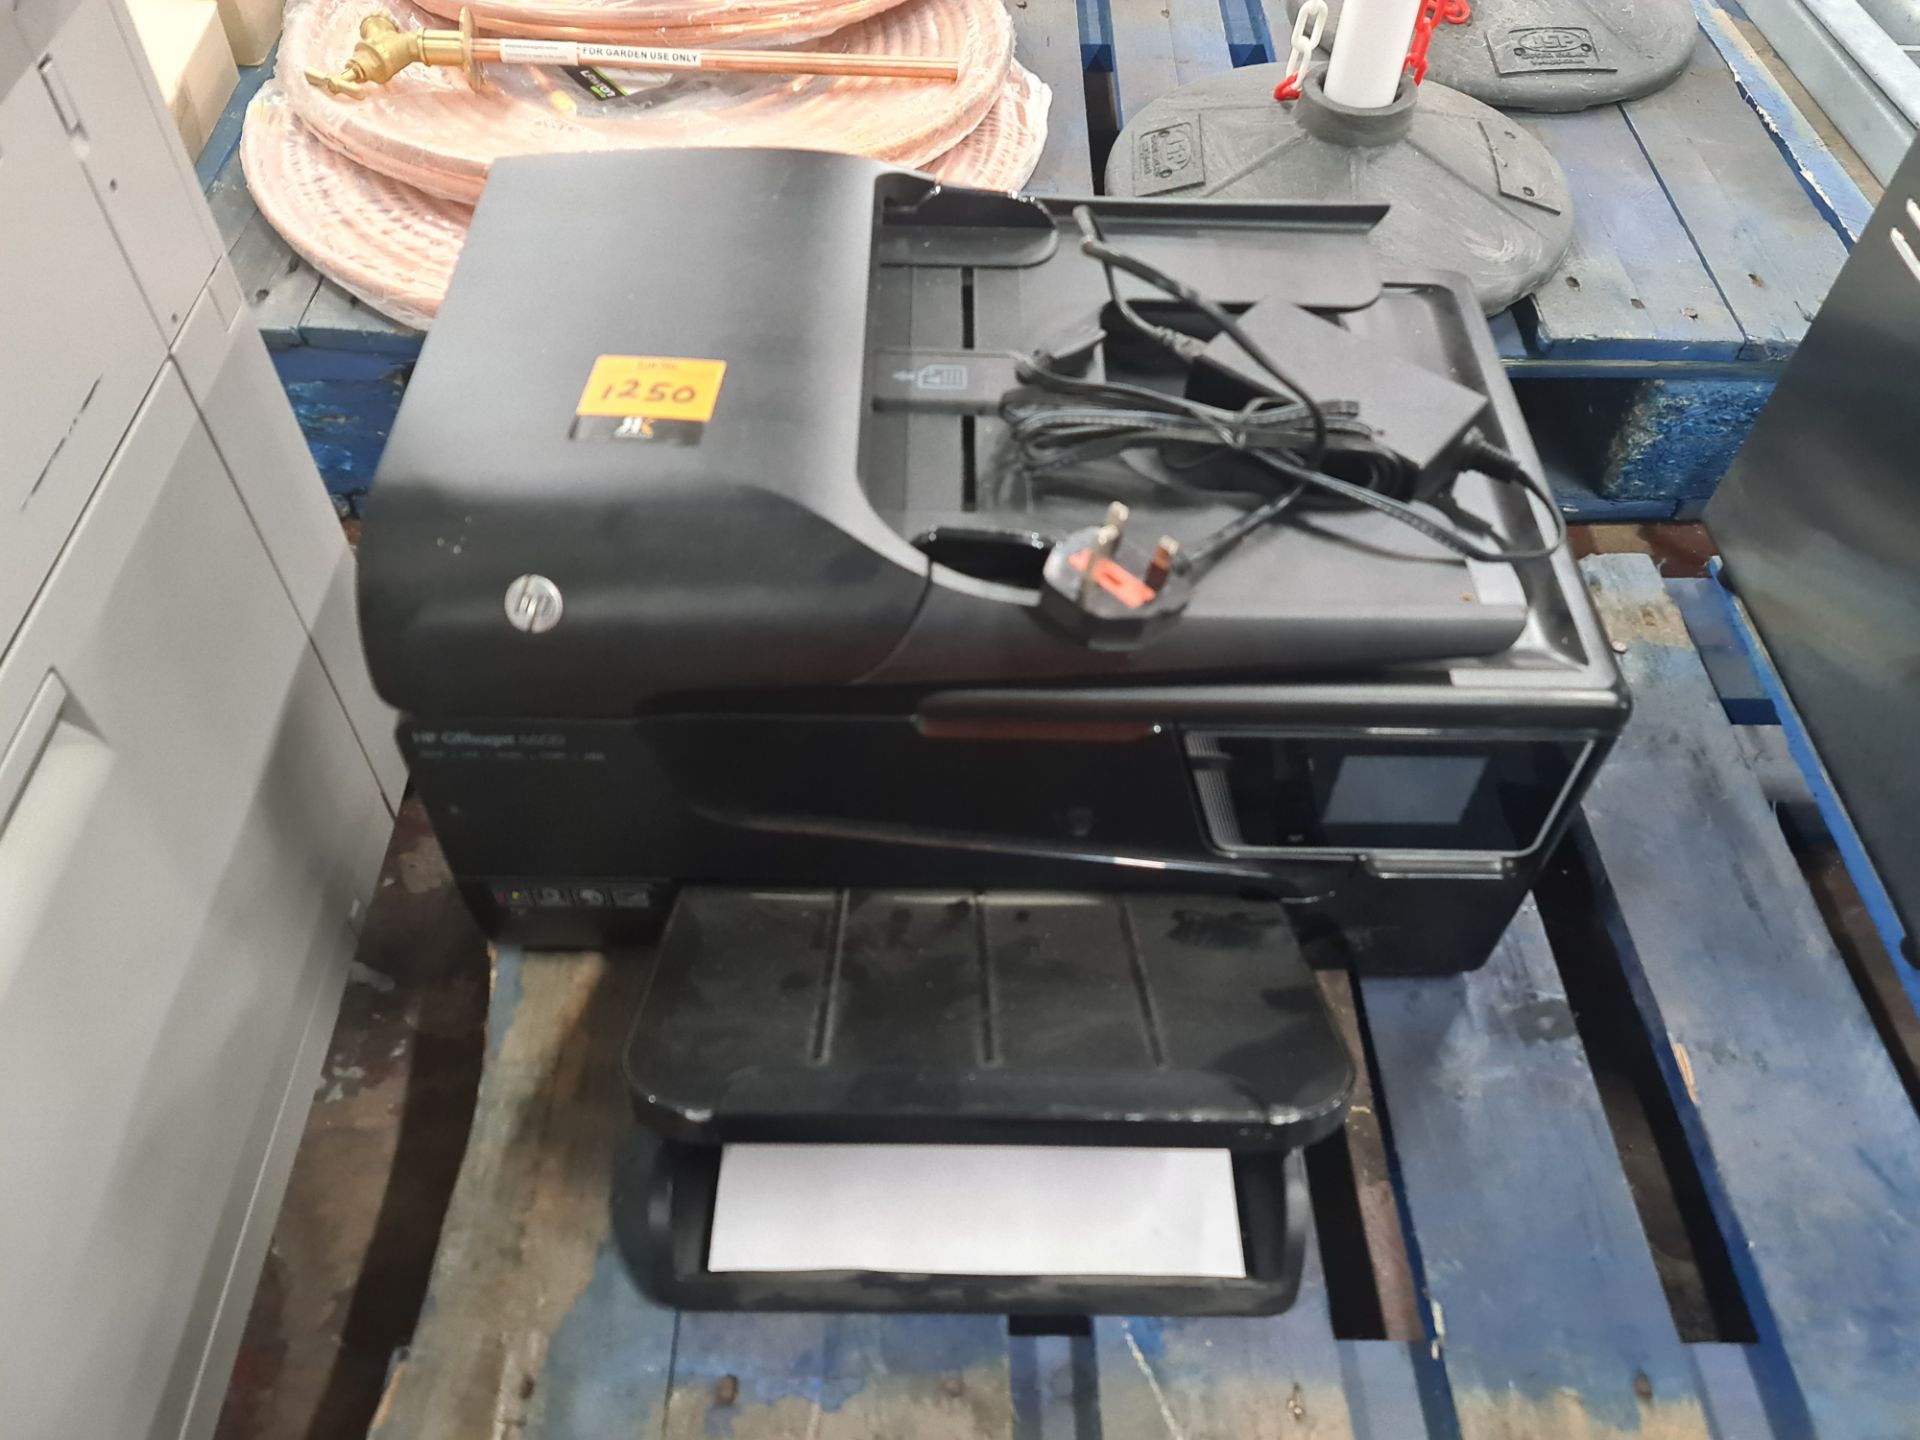 HP office jet 6600 printer/copier/scanner